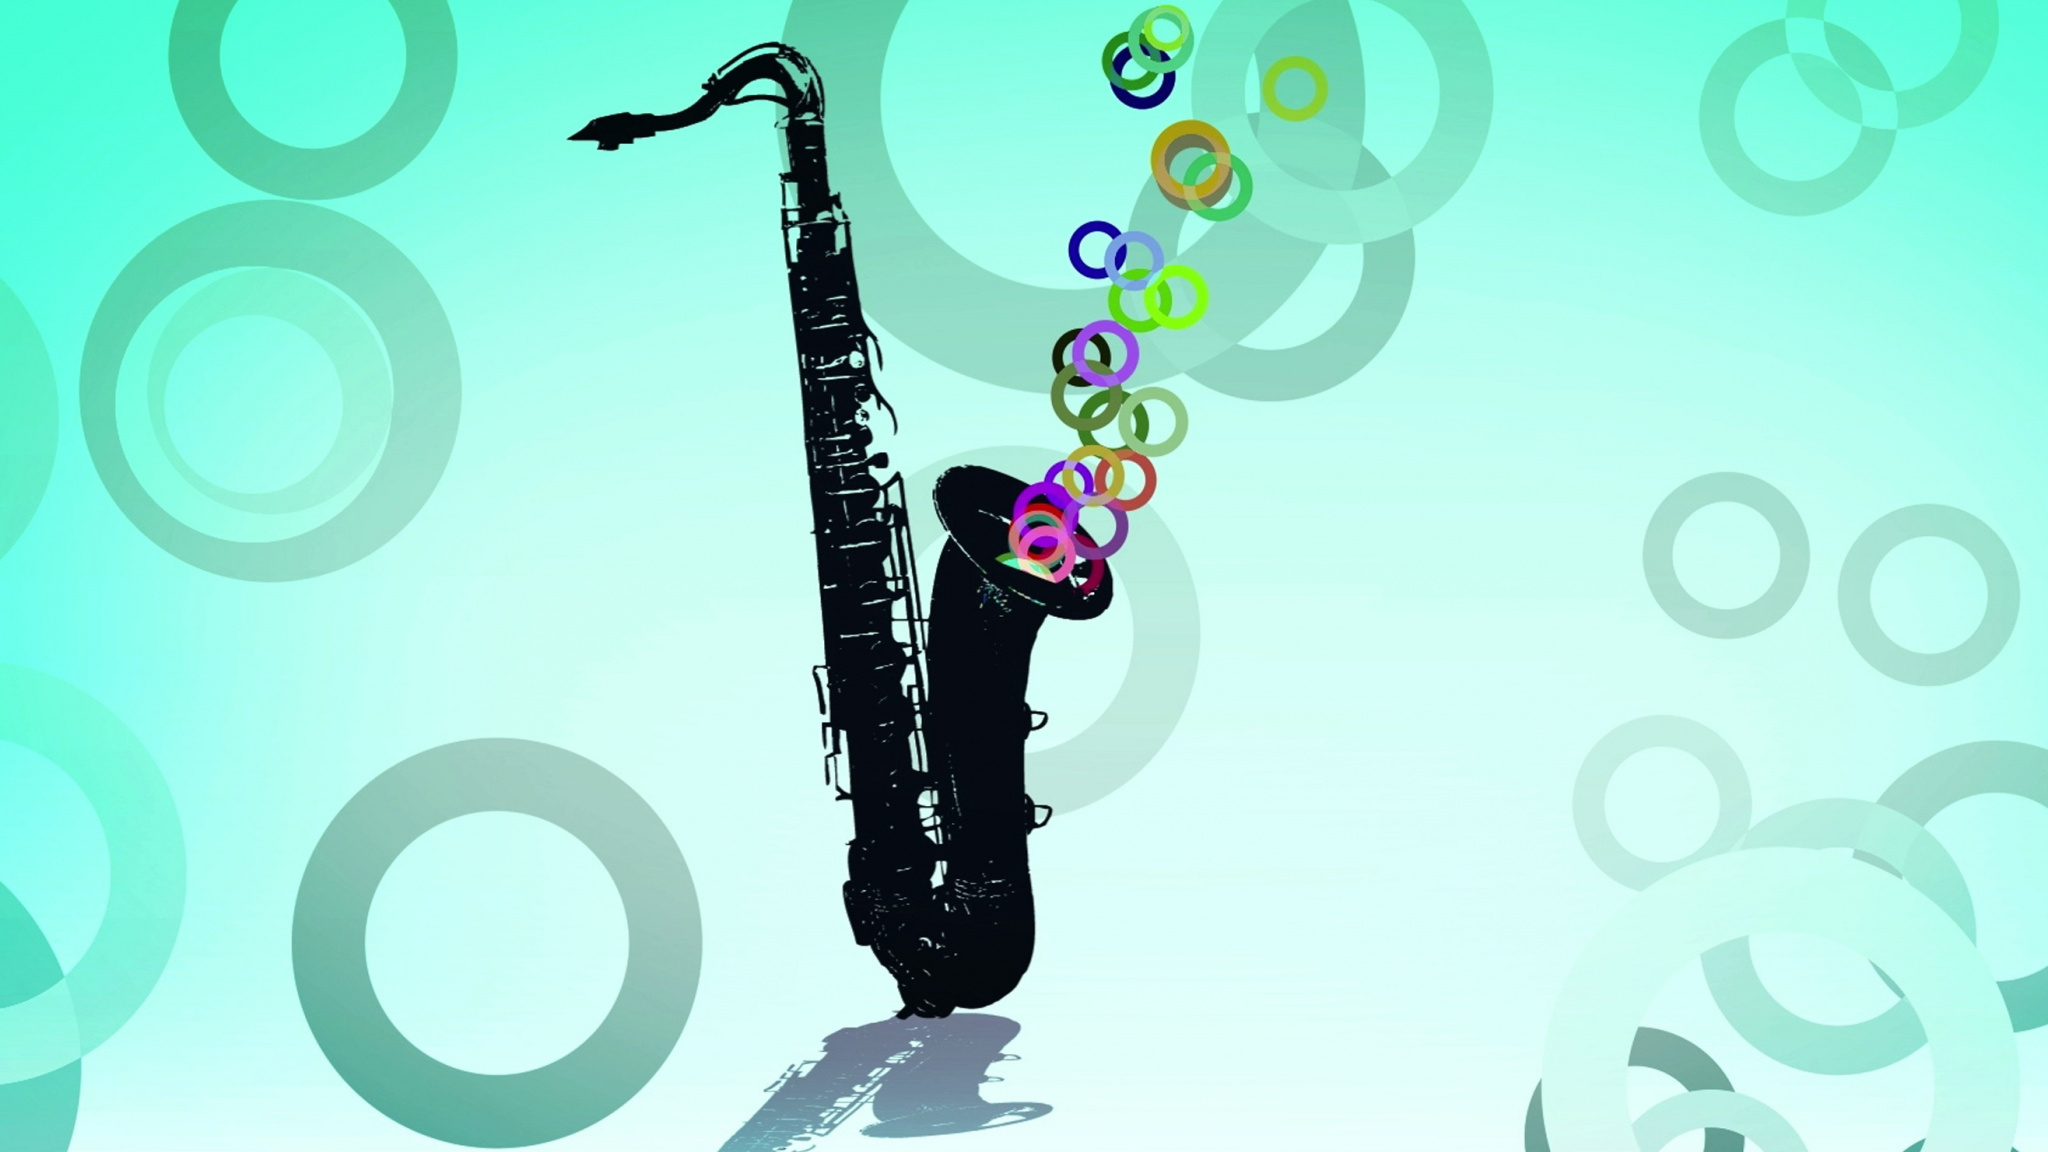 2048x1152 Download Saxophone, music, art wallpaper, , Dual Wide, Widescree